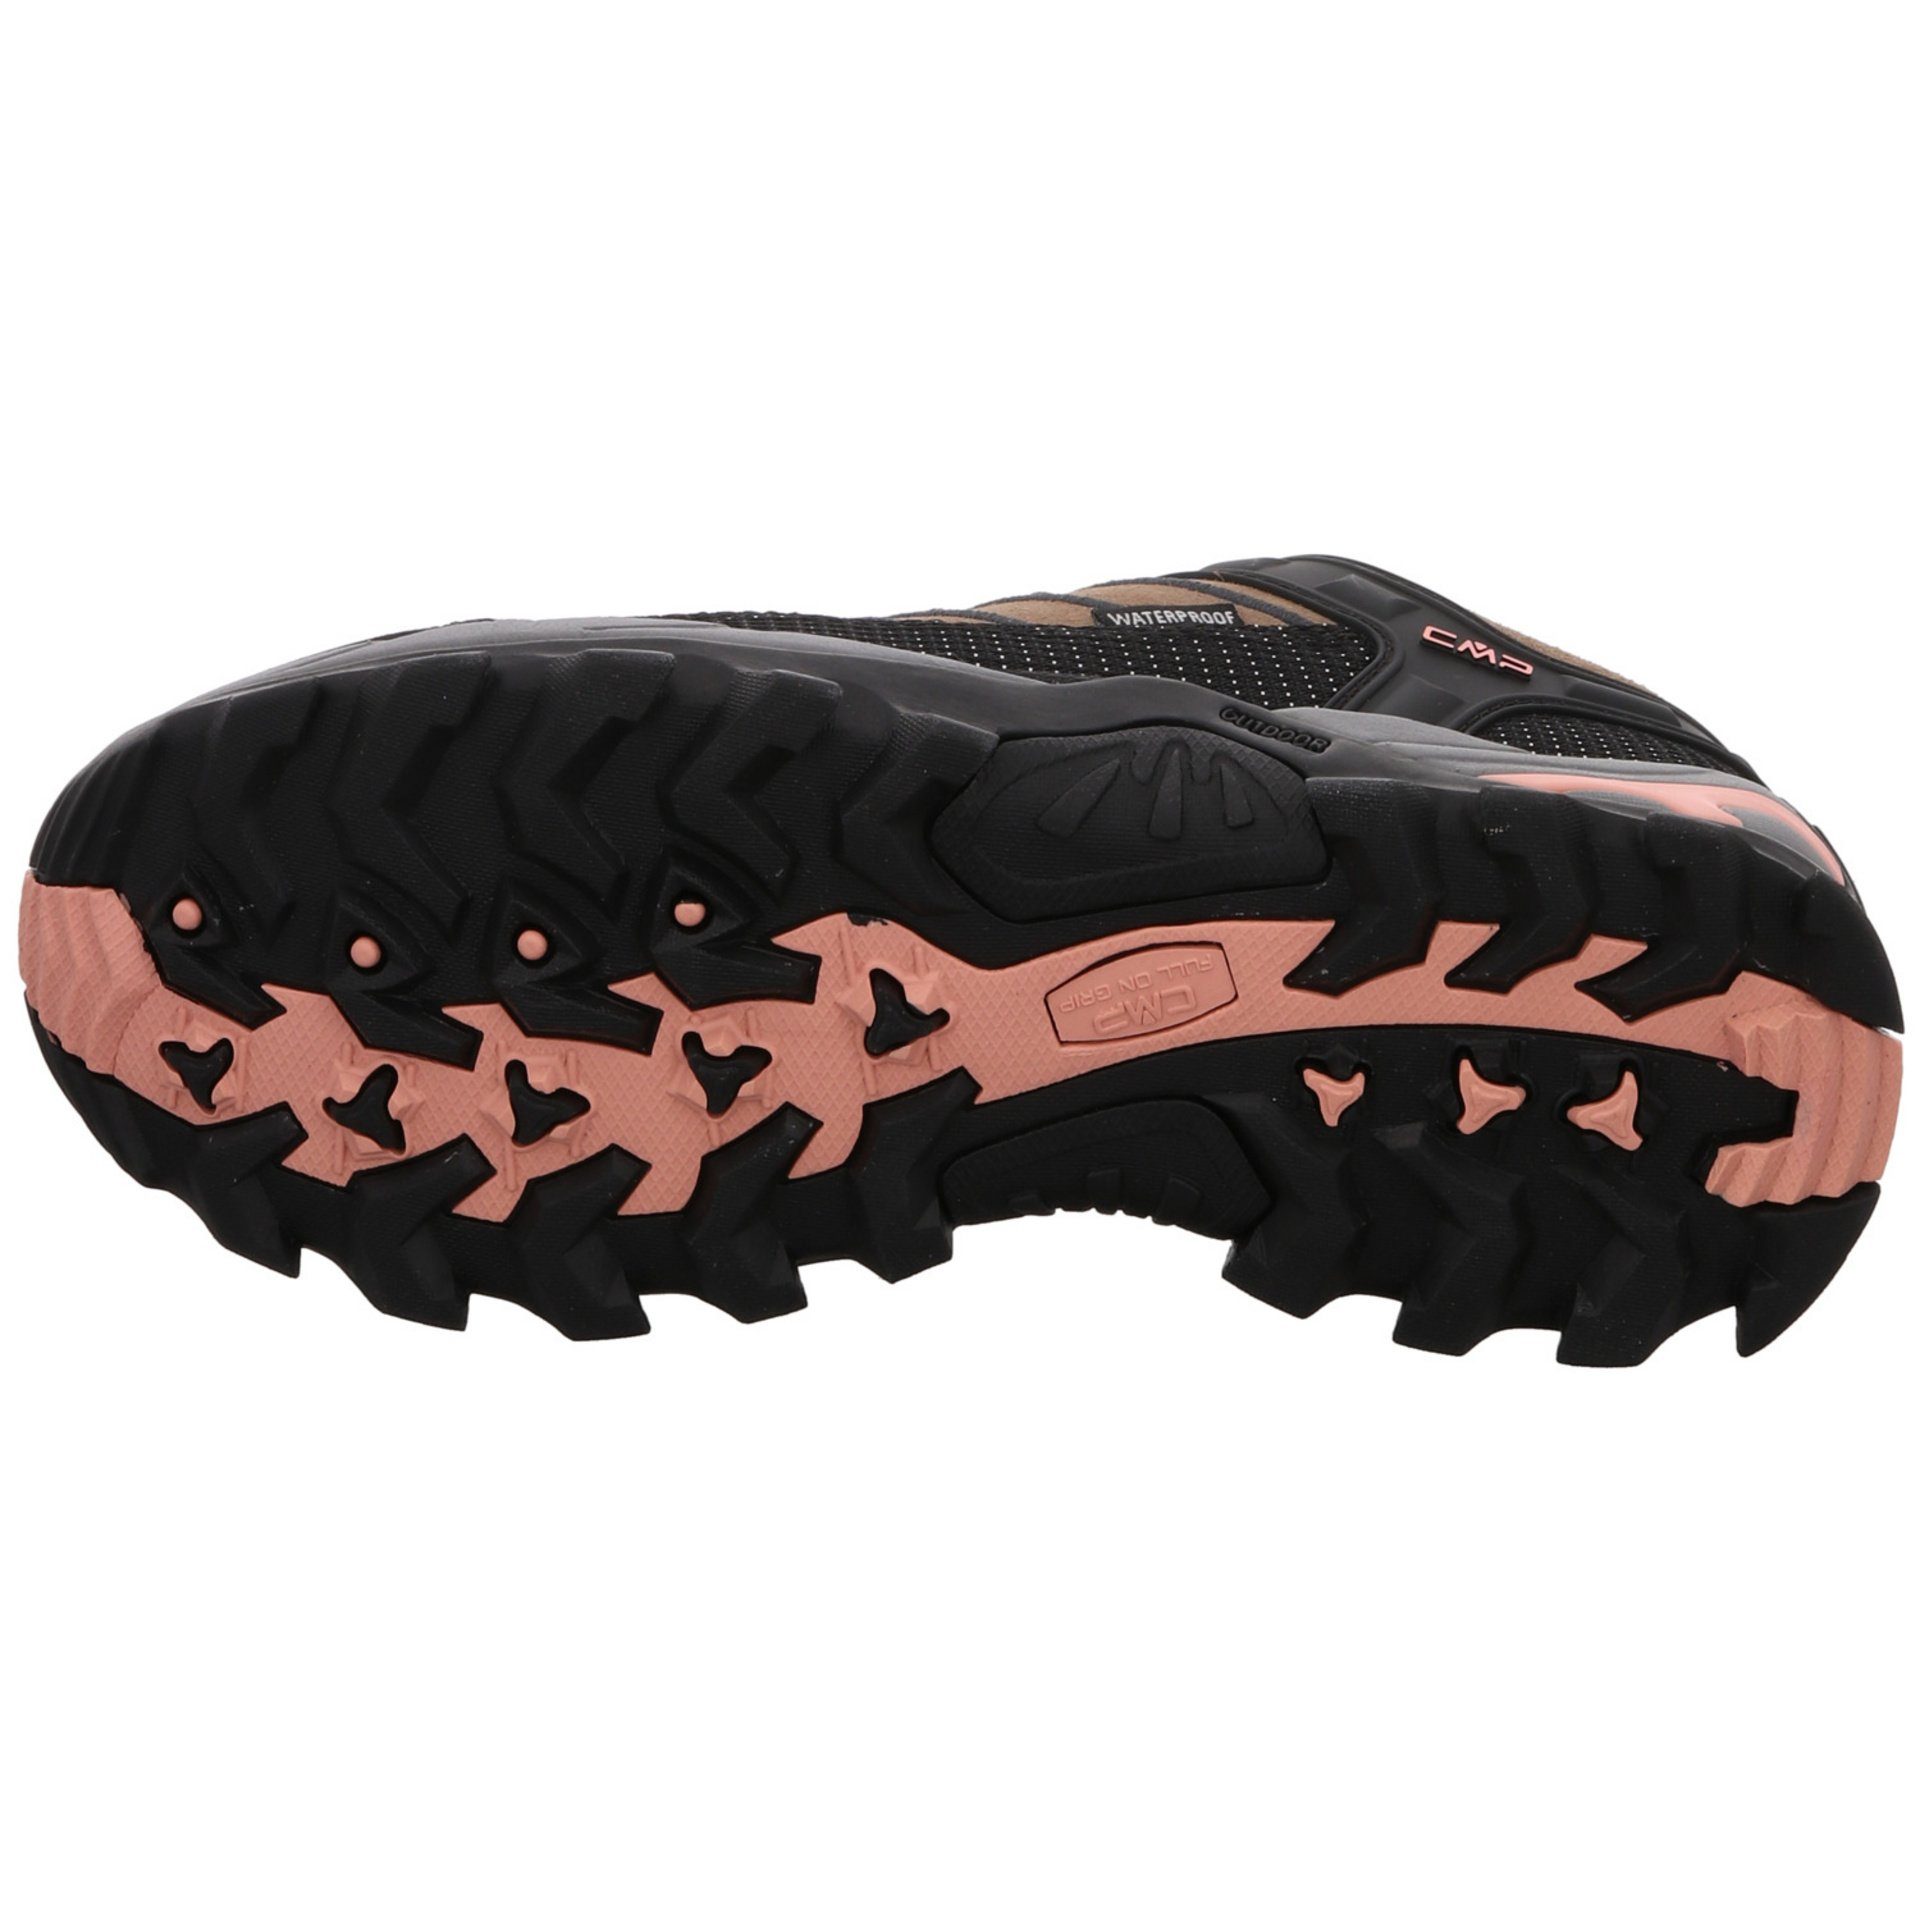 Low Damen CENERE Schuhe CMP Leder-/Textilkombination CAMPAGNOLO Rigel Outdoorschuh Outdoorschuh Outdoor